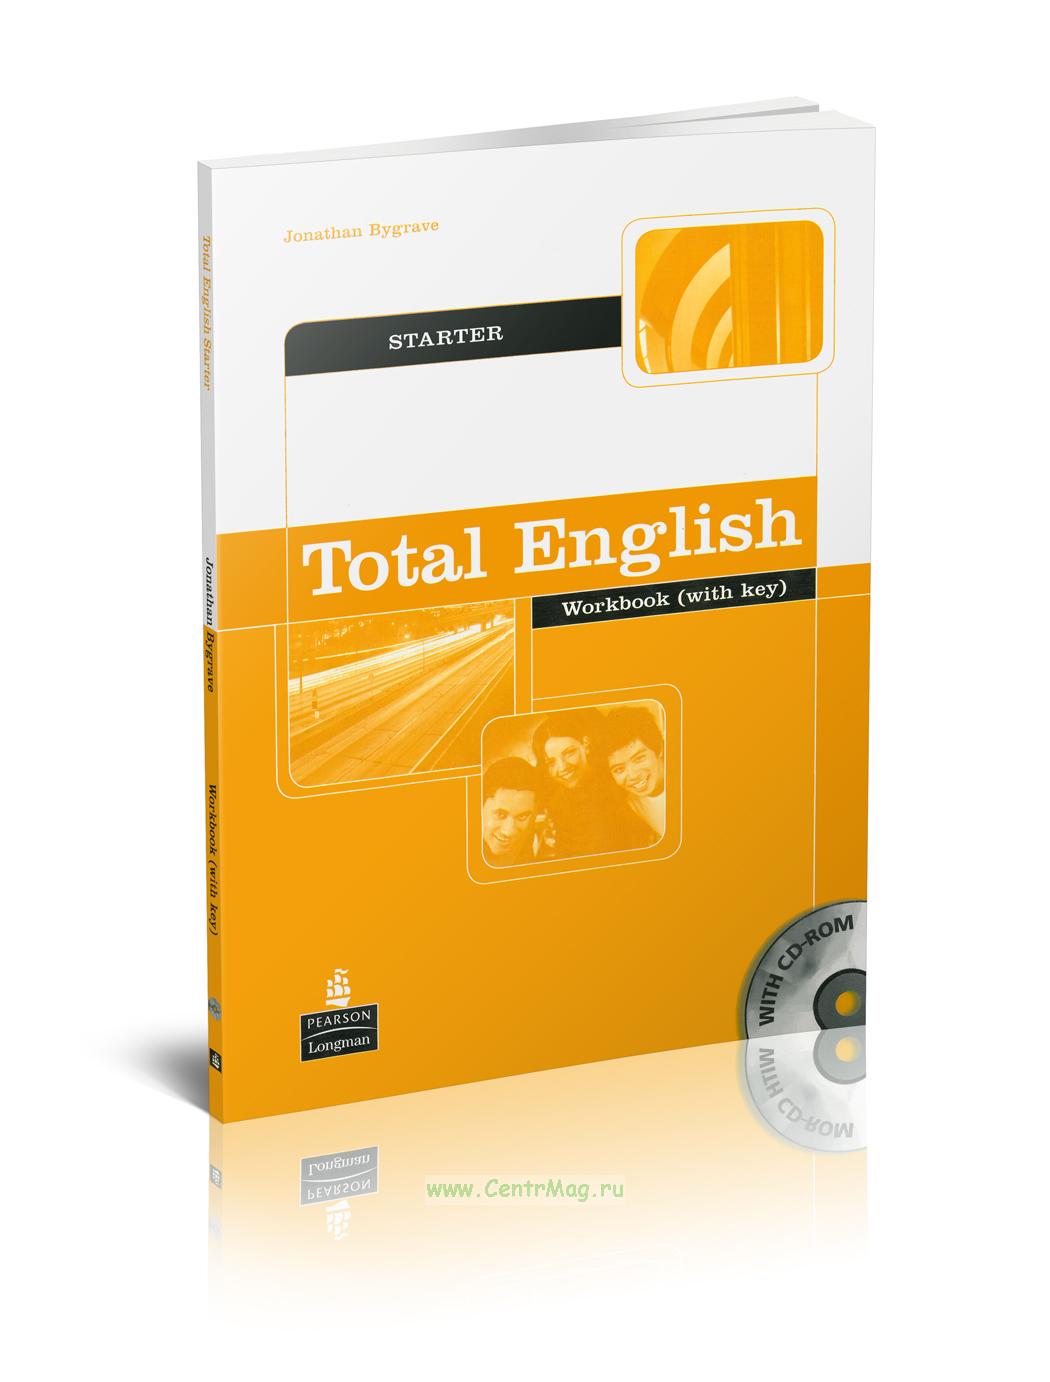 Total english workbook. Тотал Инглиш стартер. New total English. Учебники по английскому total English. Workbook (with Key).